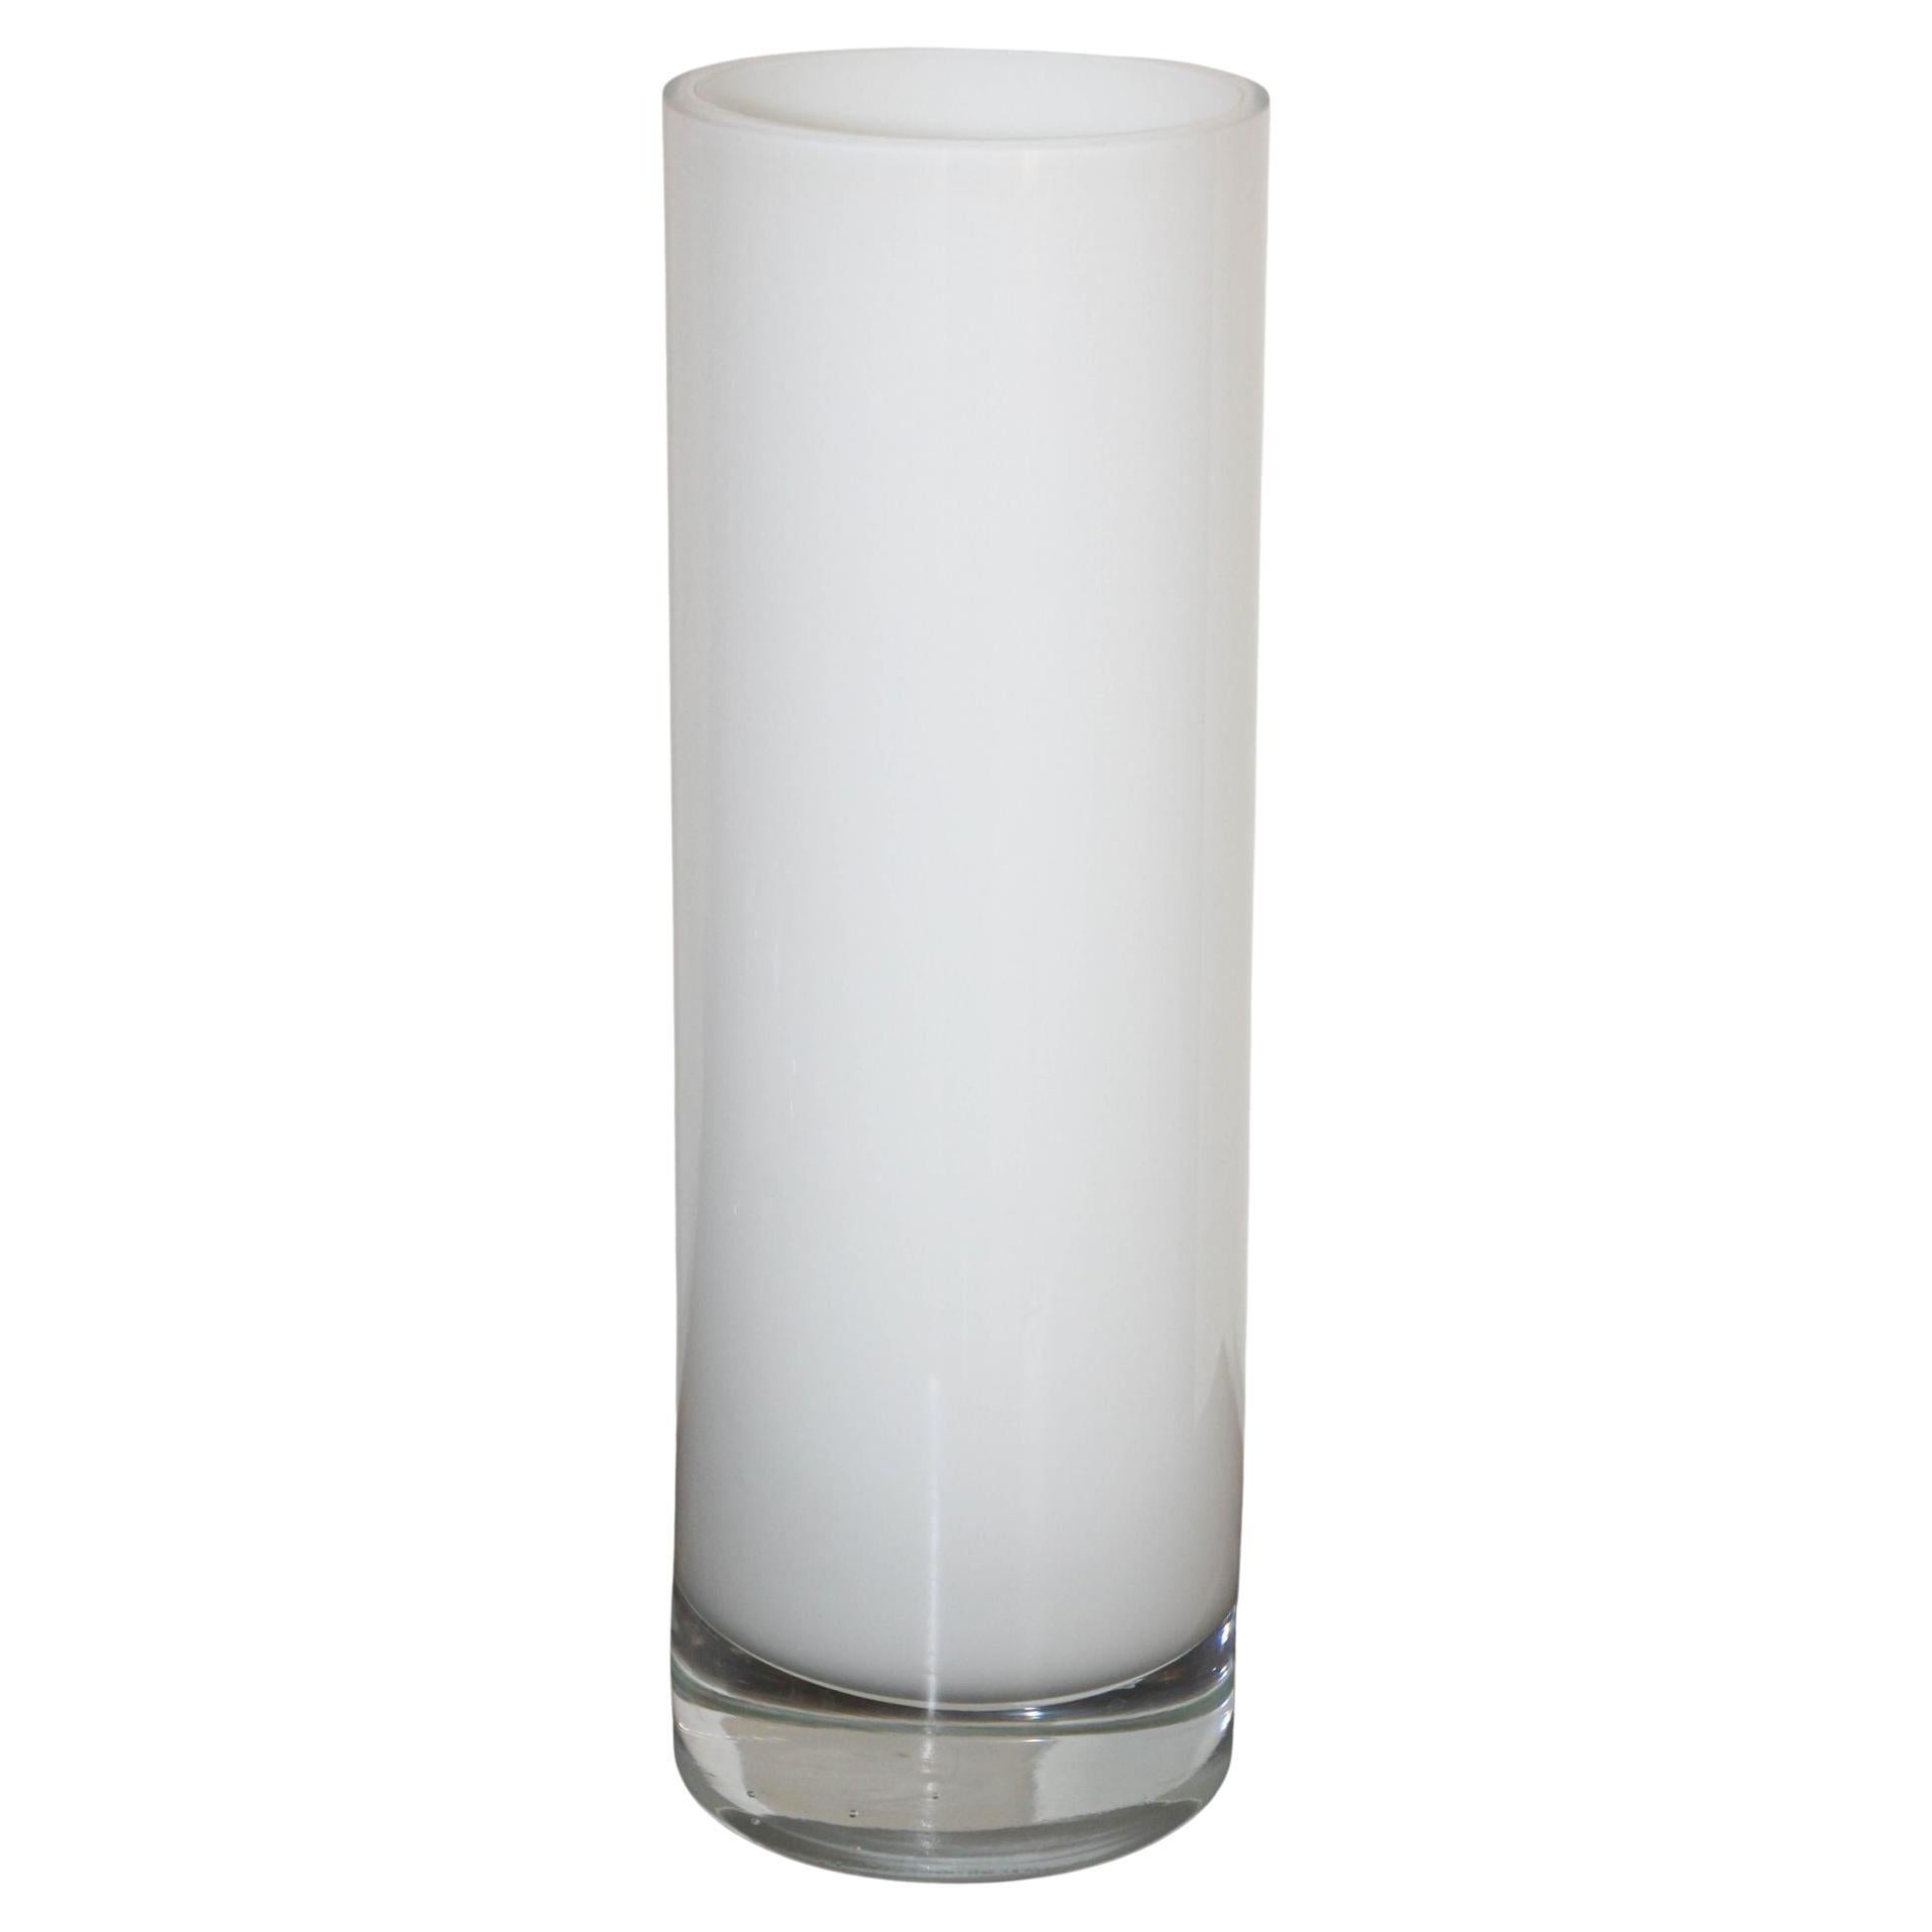 Modernist Minimalist White Glass Flower Vase